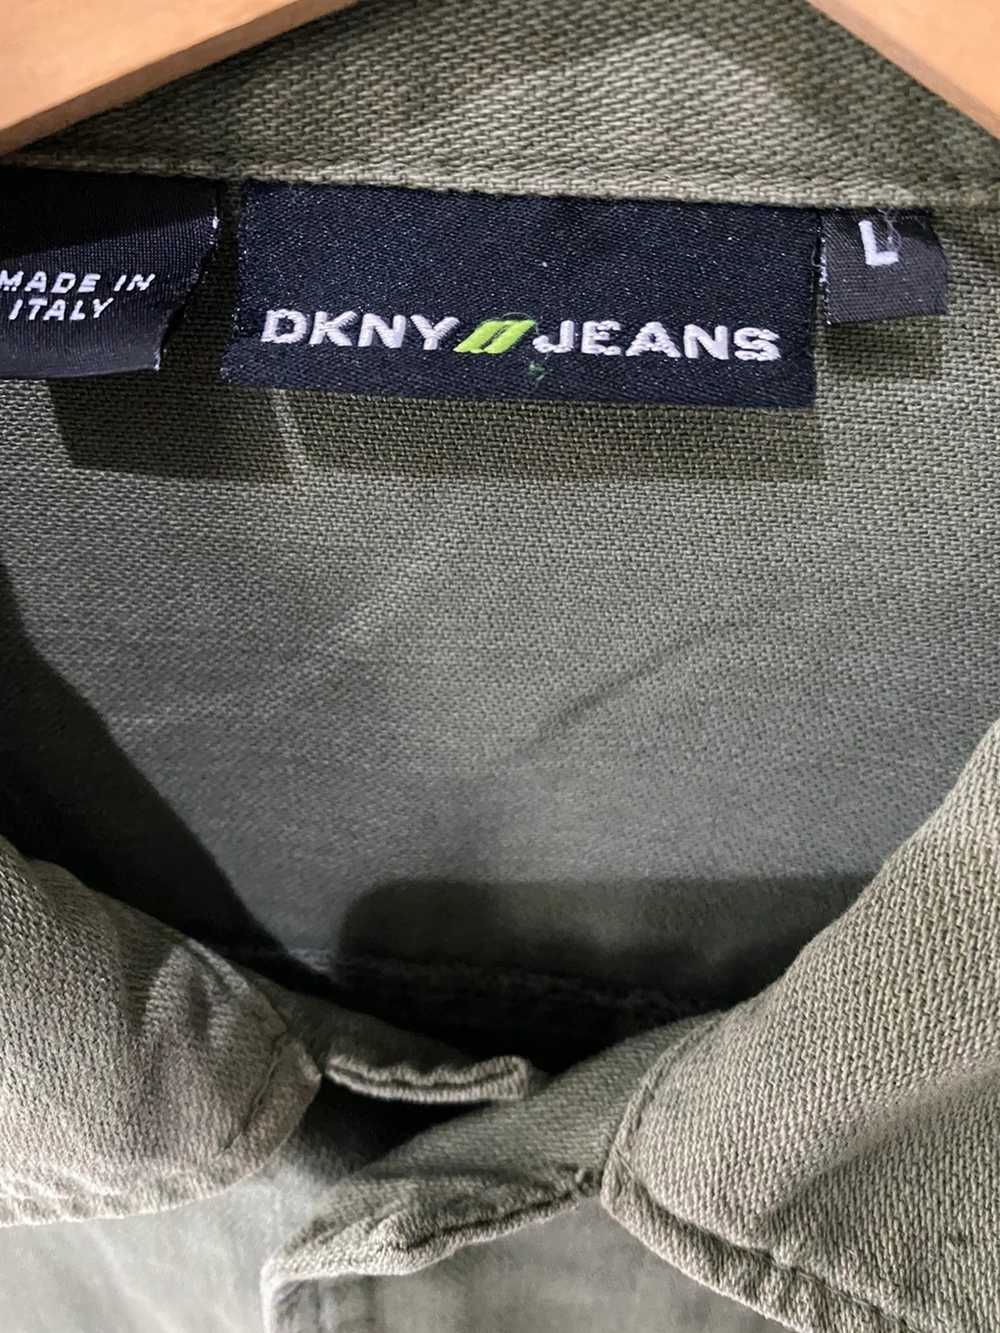 DKNY DKNY Jeans khaki shirt - image 5